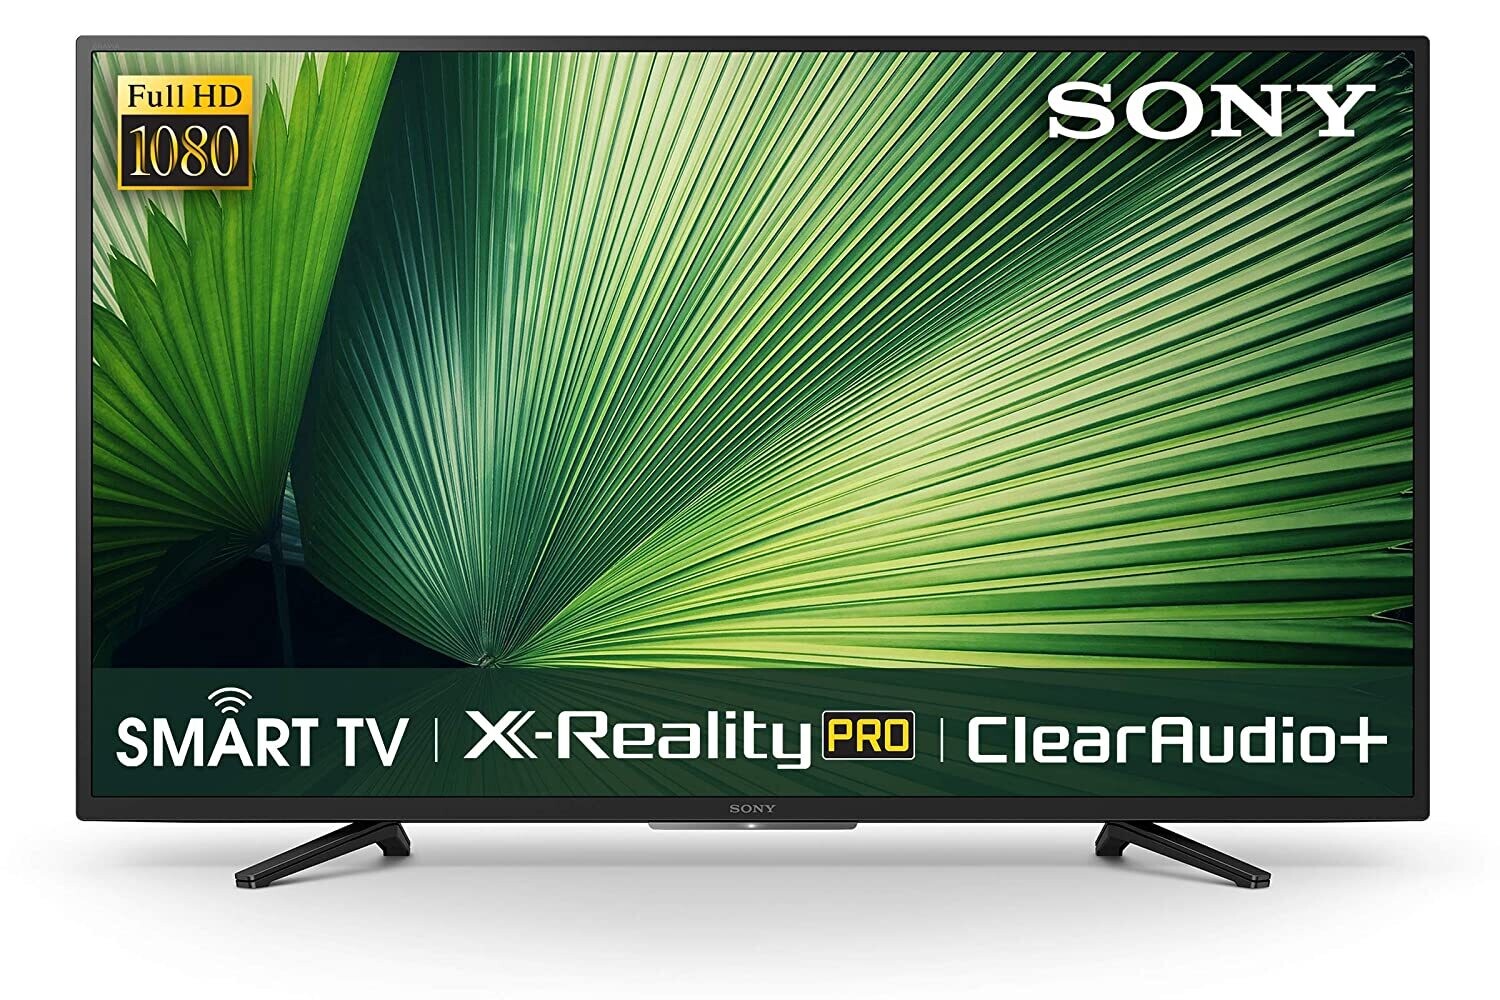 Sony | Smart TV | LED | Full HD | High Dynamic Range | KDL-43W6600